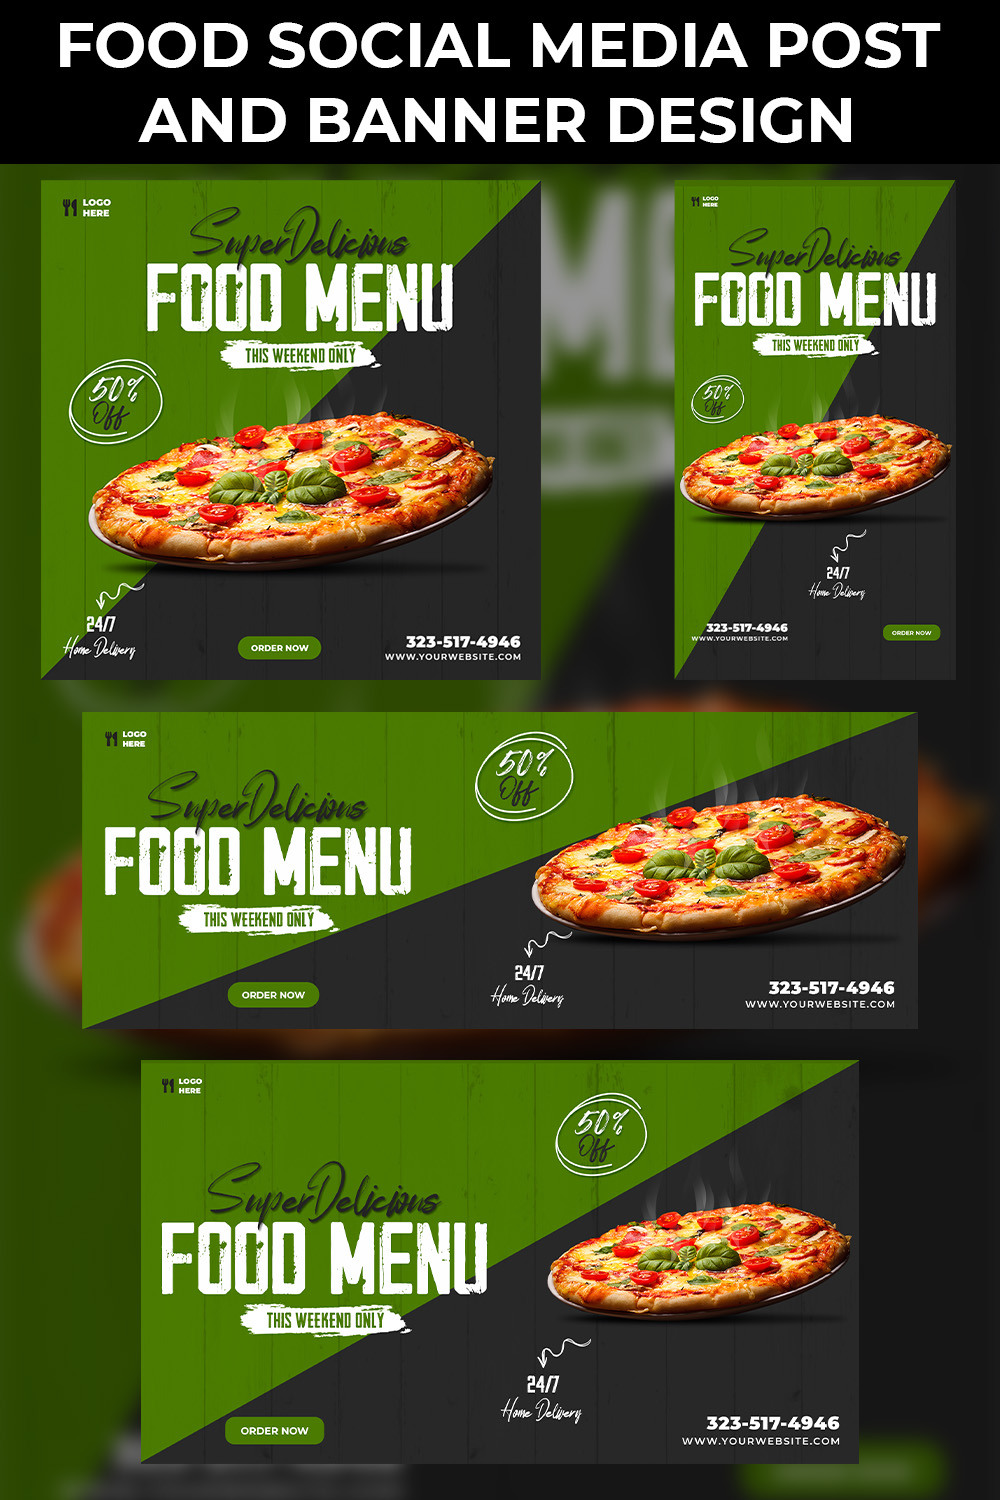 Food Social Media Post And Banner Design Template pinterest image.